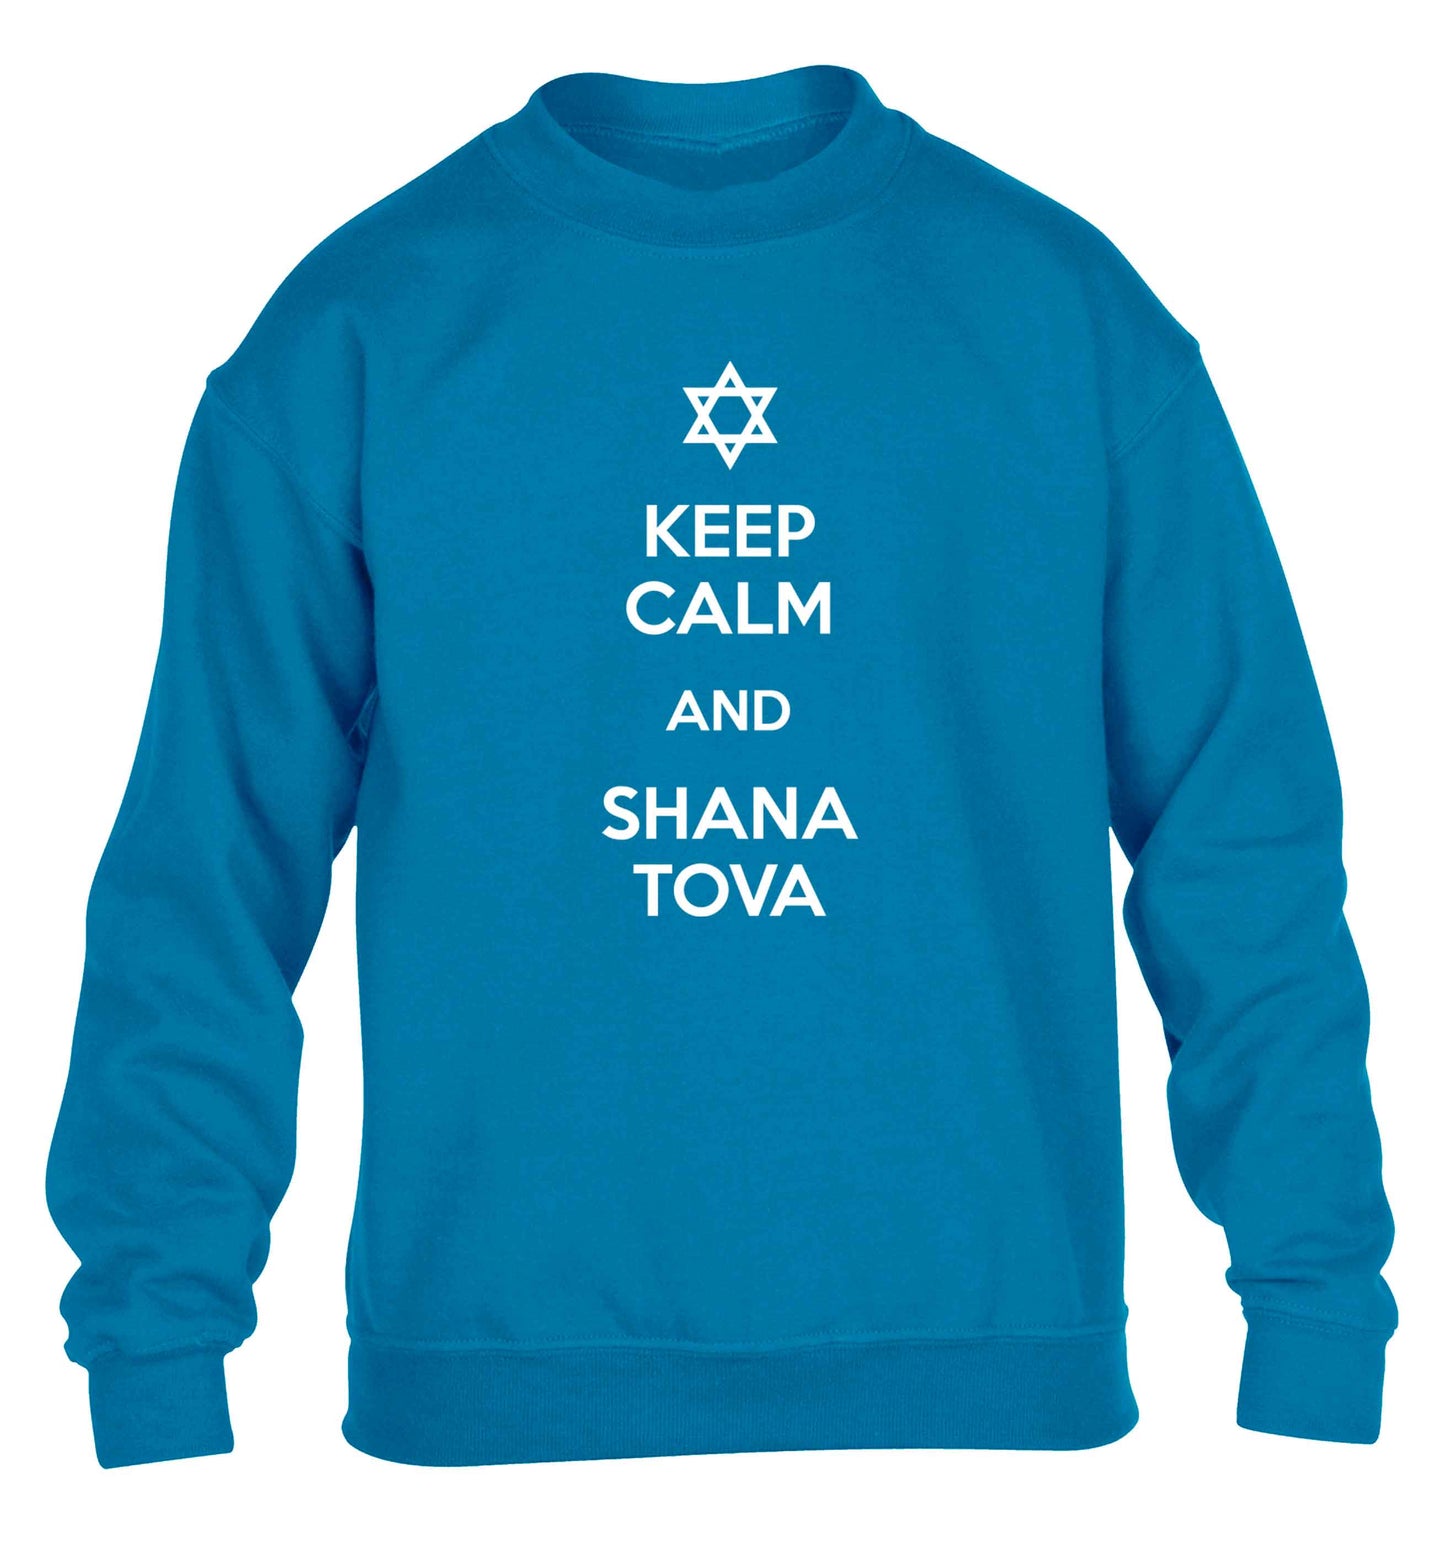 Keep calm and shana tova children's blue sweater 12-13 Years